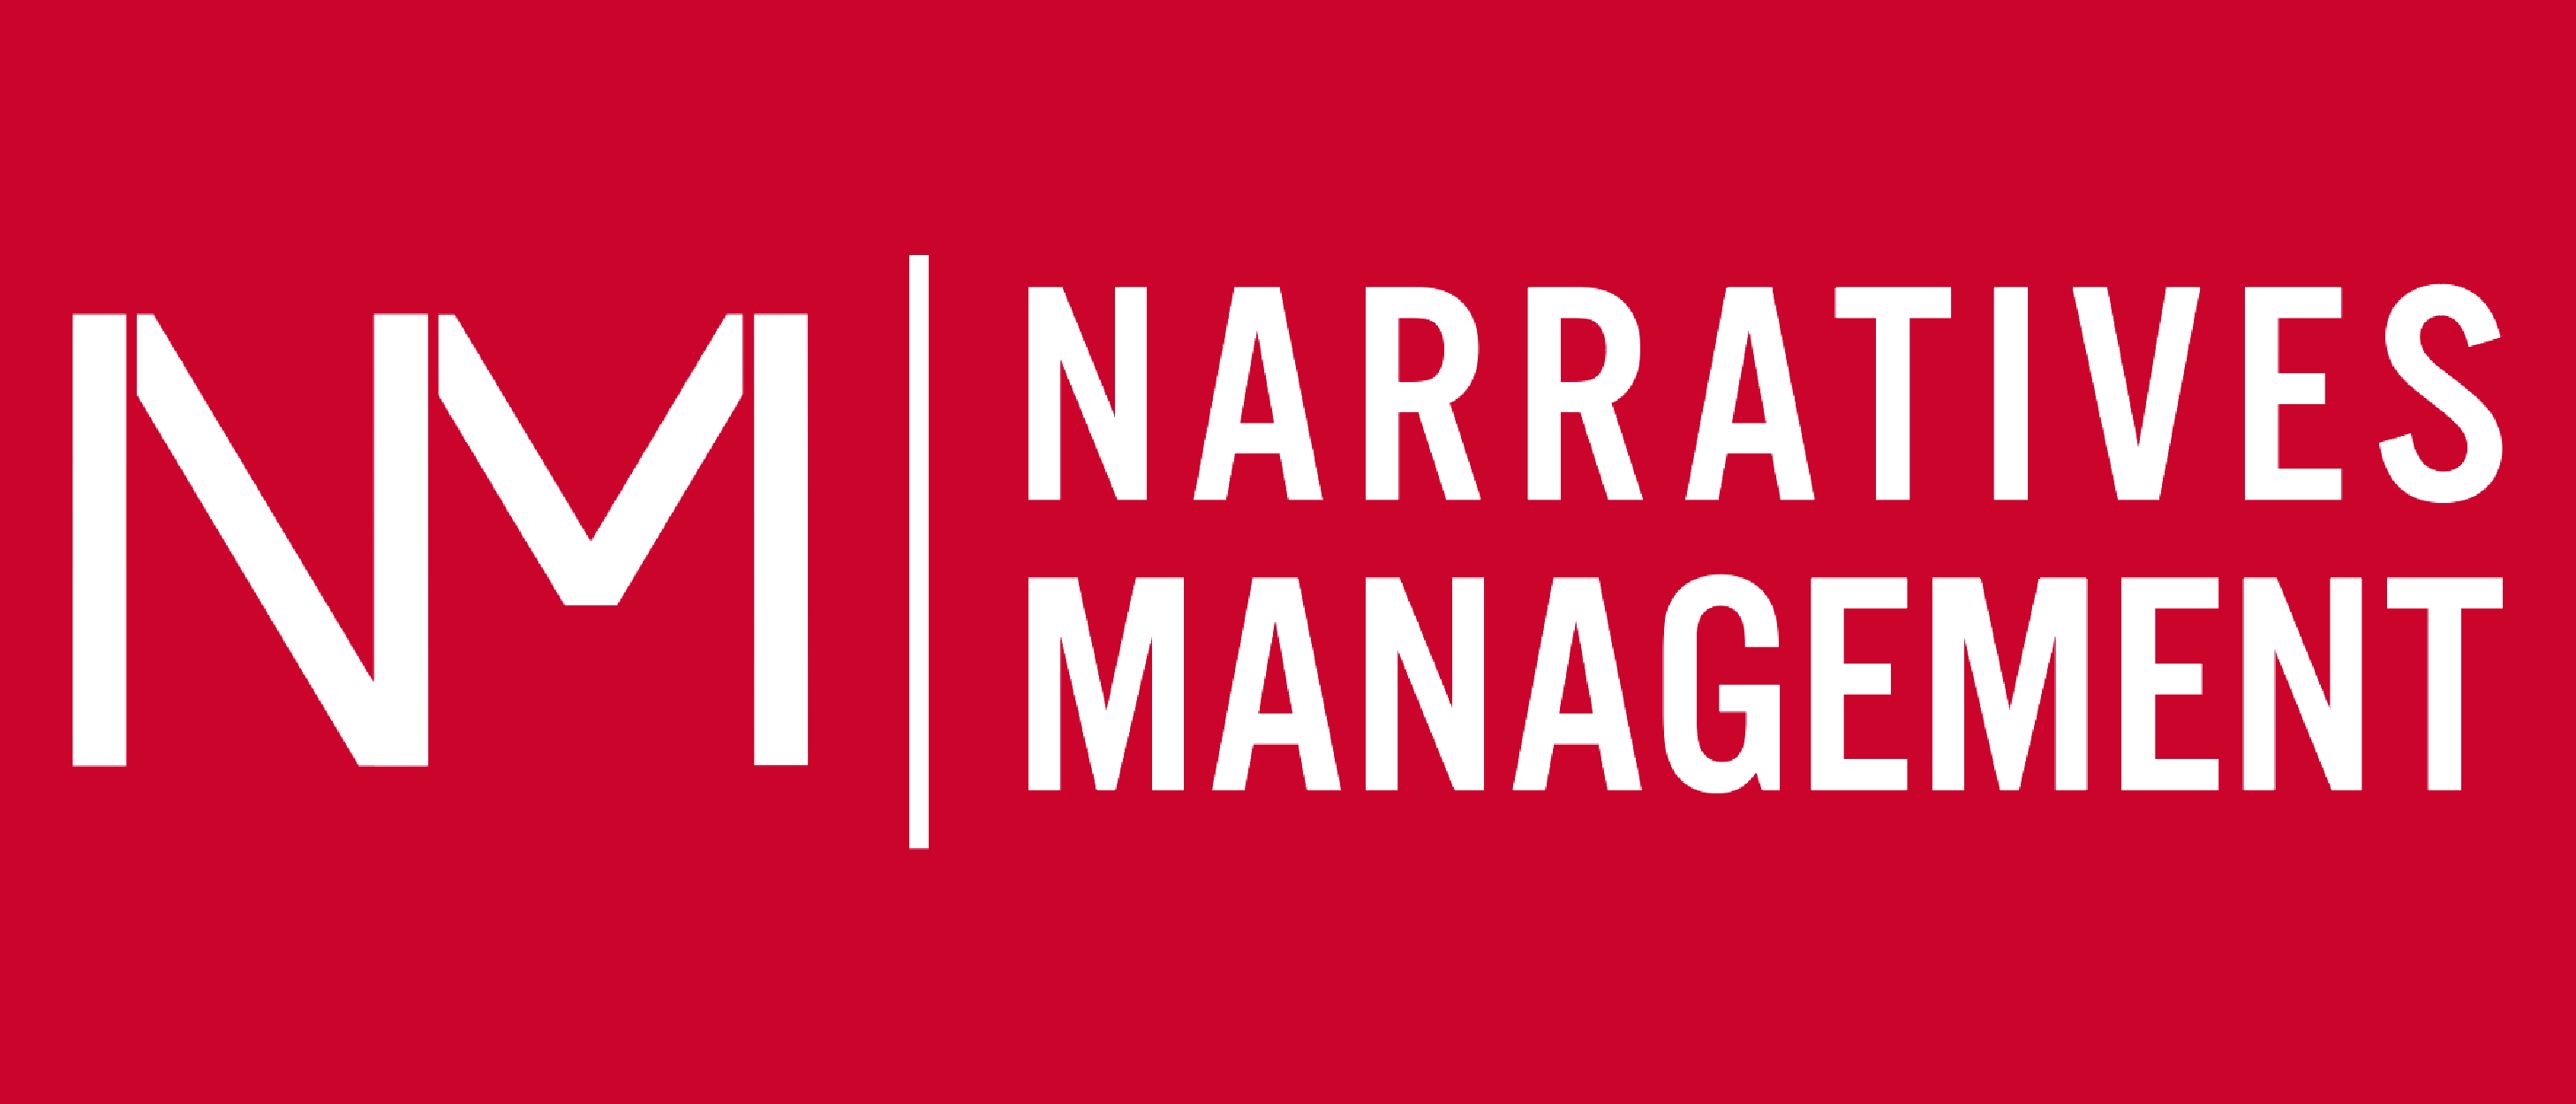 Narratives Management